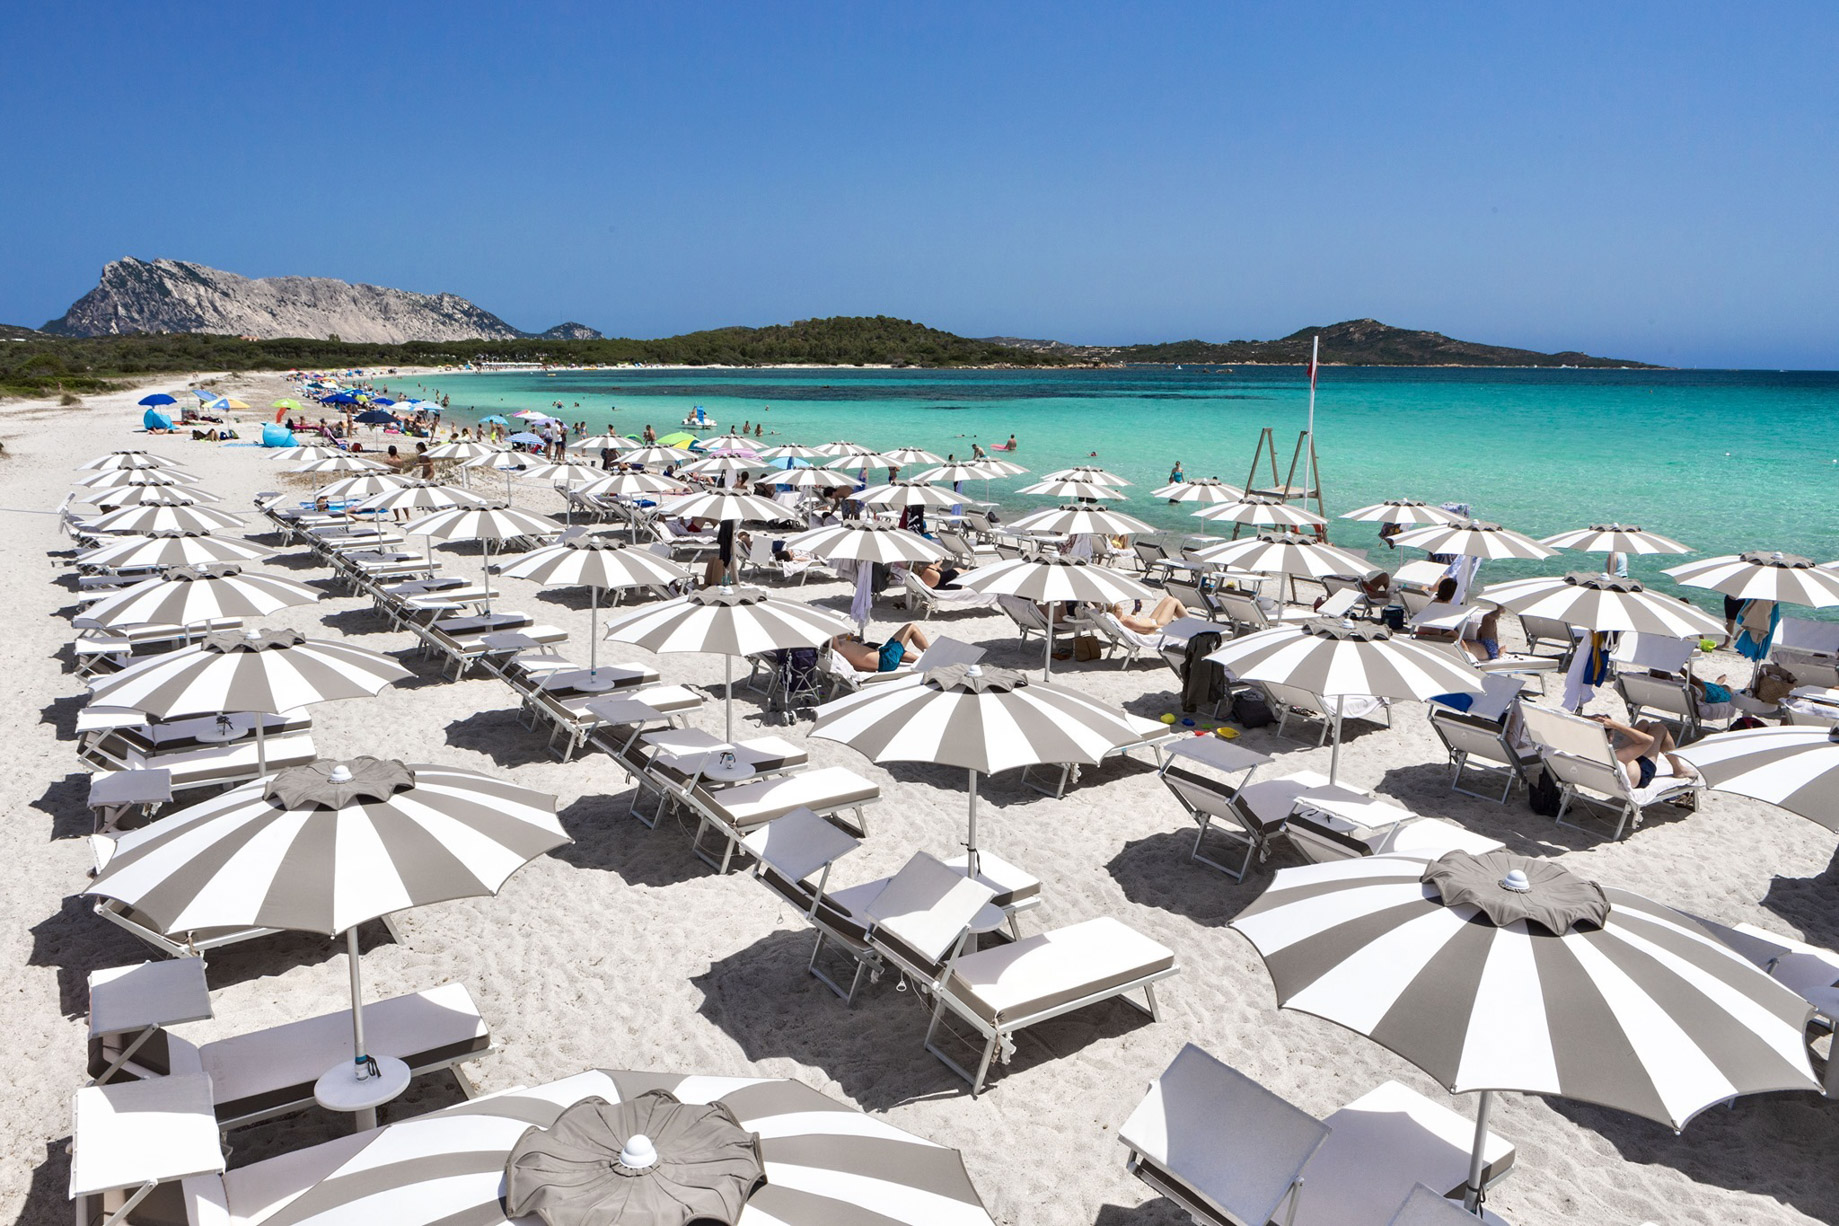 Baglioni Resort Sardinia - San Teodoro, Sardegna, Italy - Beach